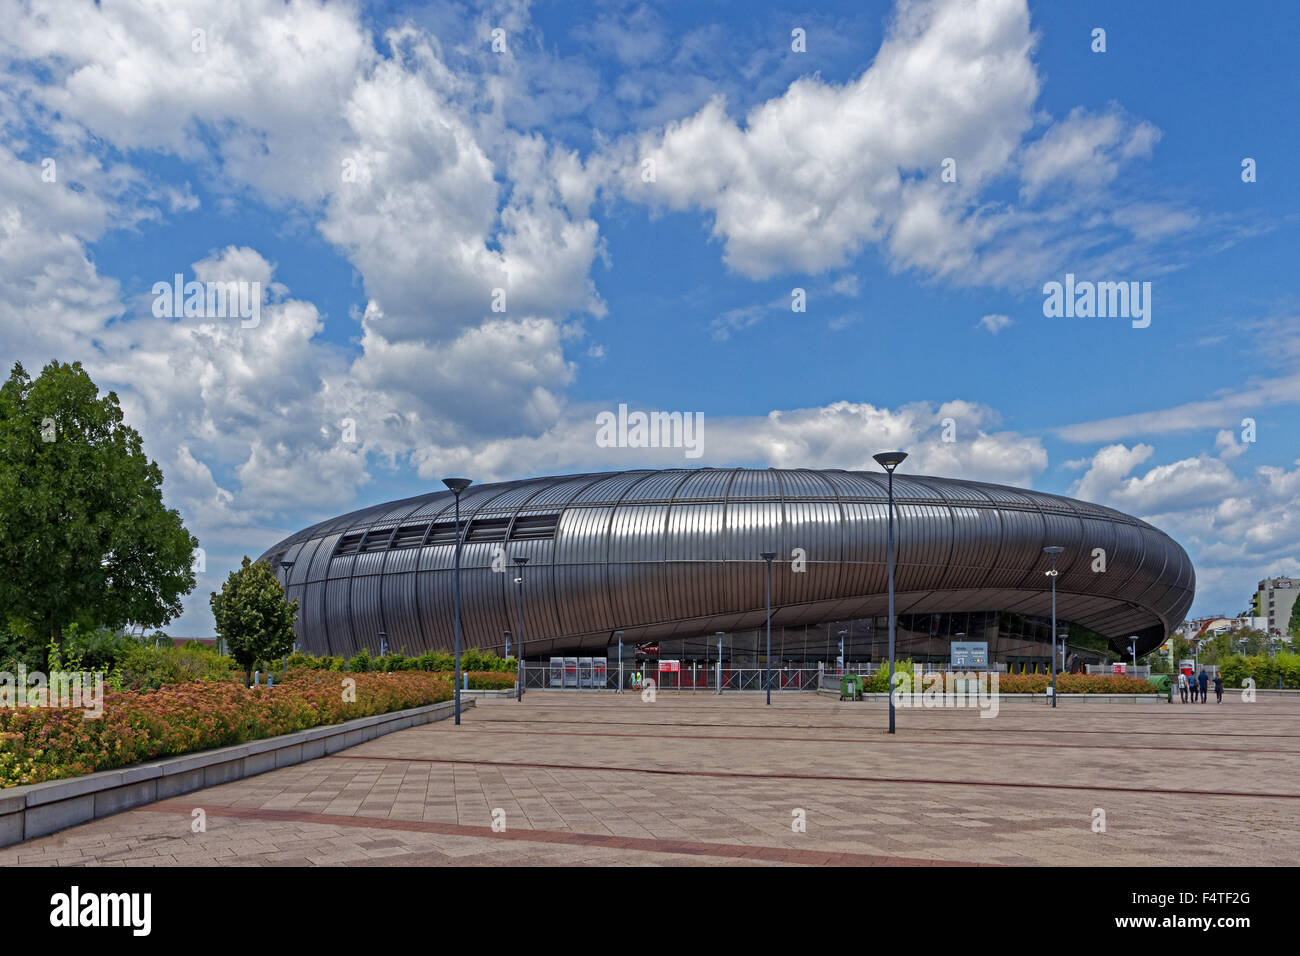 Sports stadium, Papp Laszlo Budapest sports arena Stock Photo